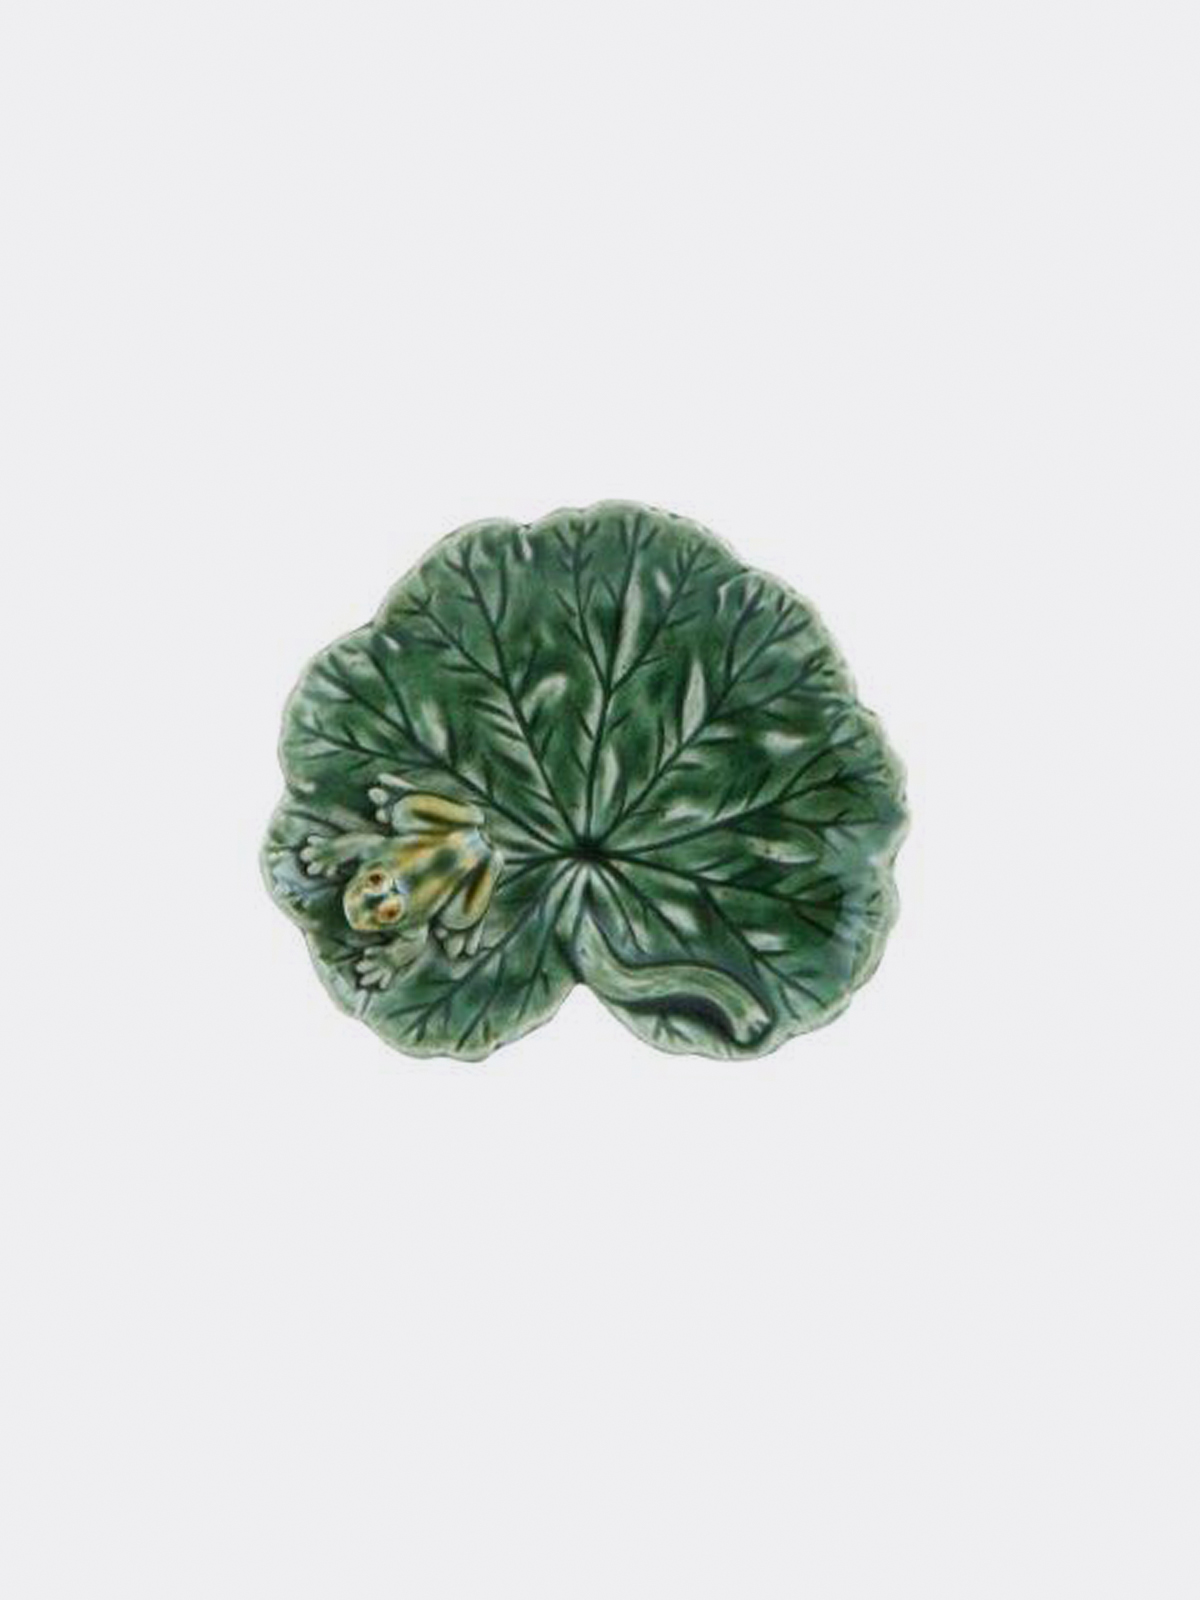 Bordallo Pinheiro Ceramic Handmade and Handpainted Geranium Leaf With Frog